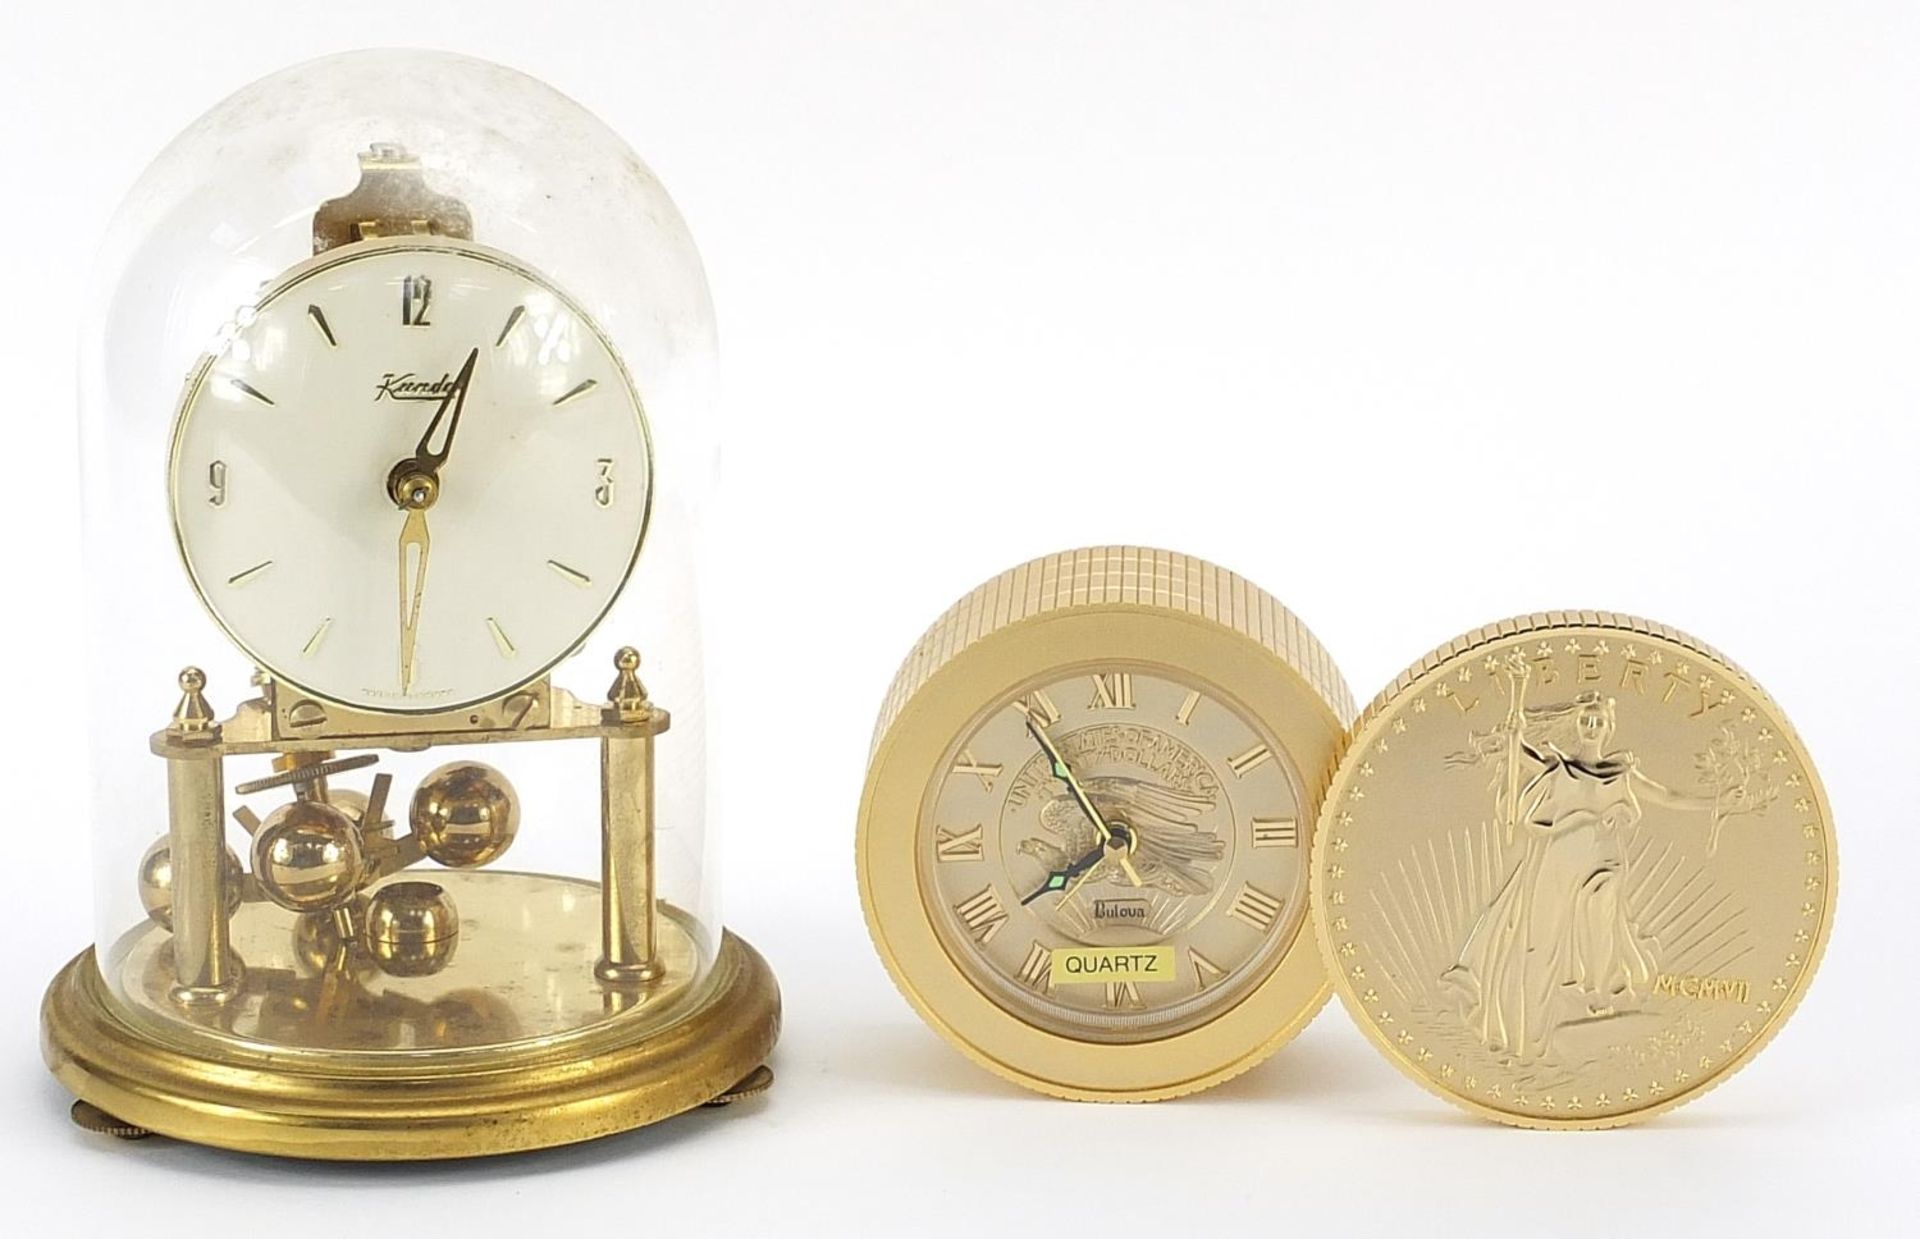 Kundo anniversary clock and Bulova quartz Liberty coin design desk clock, the largest 18cm high - Image 2 of 6